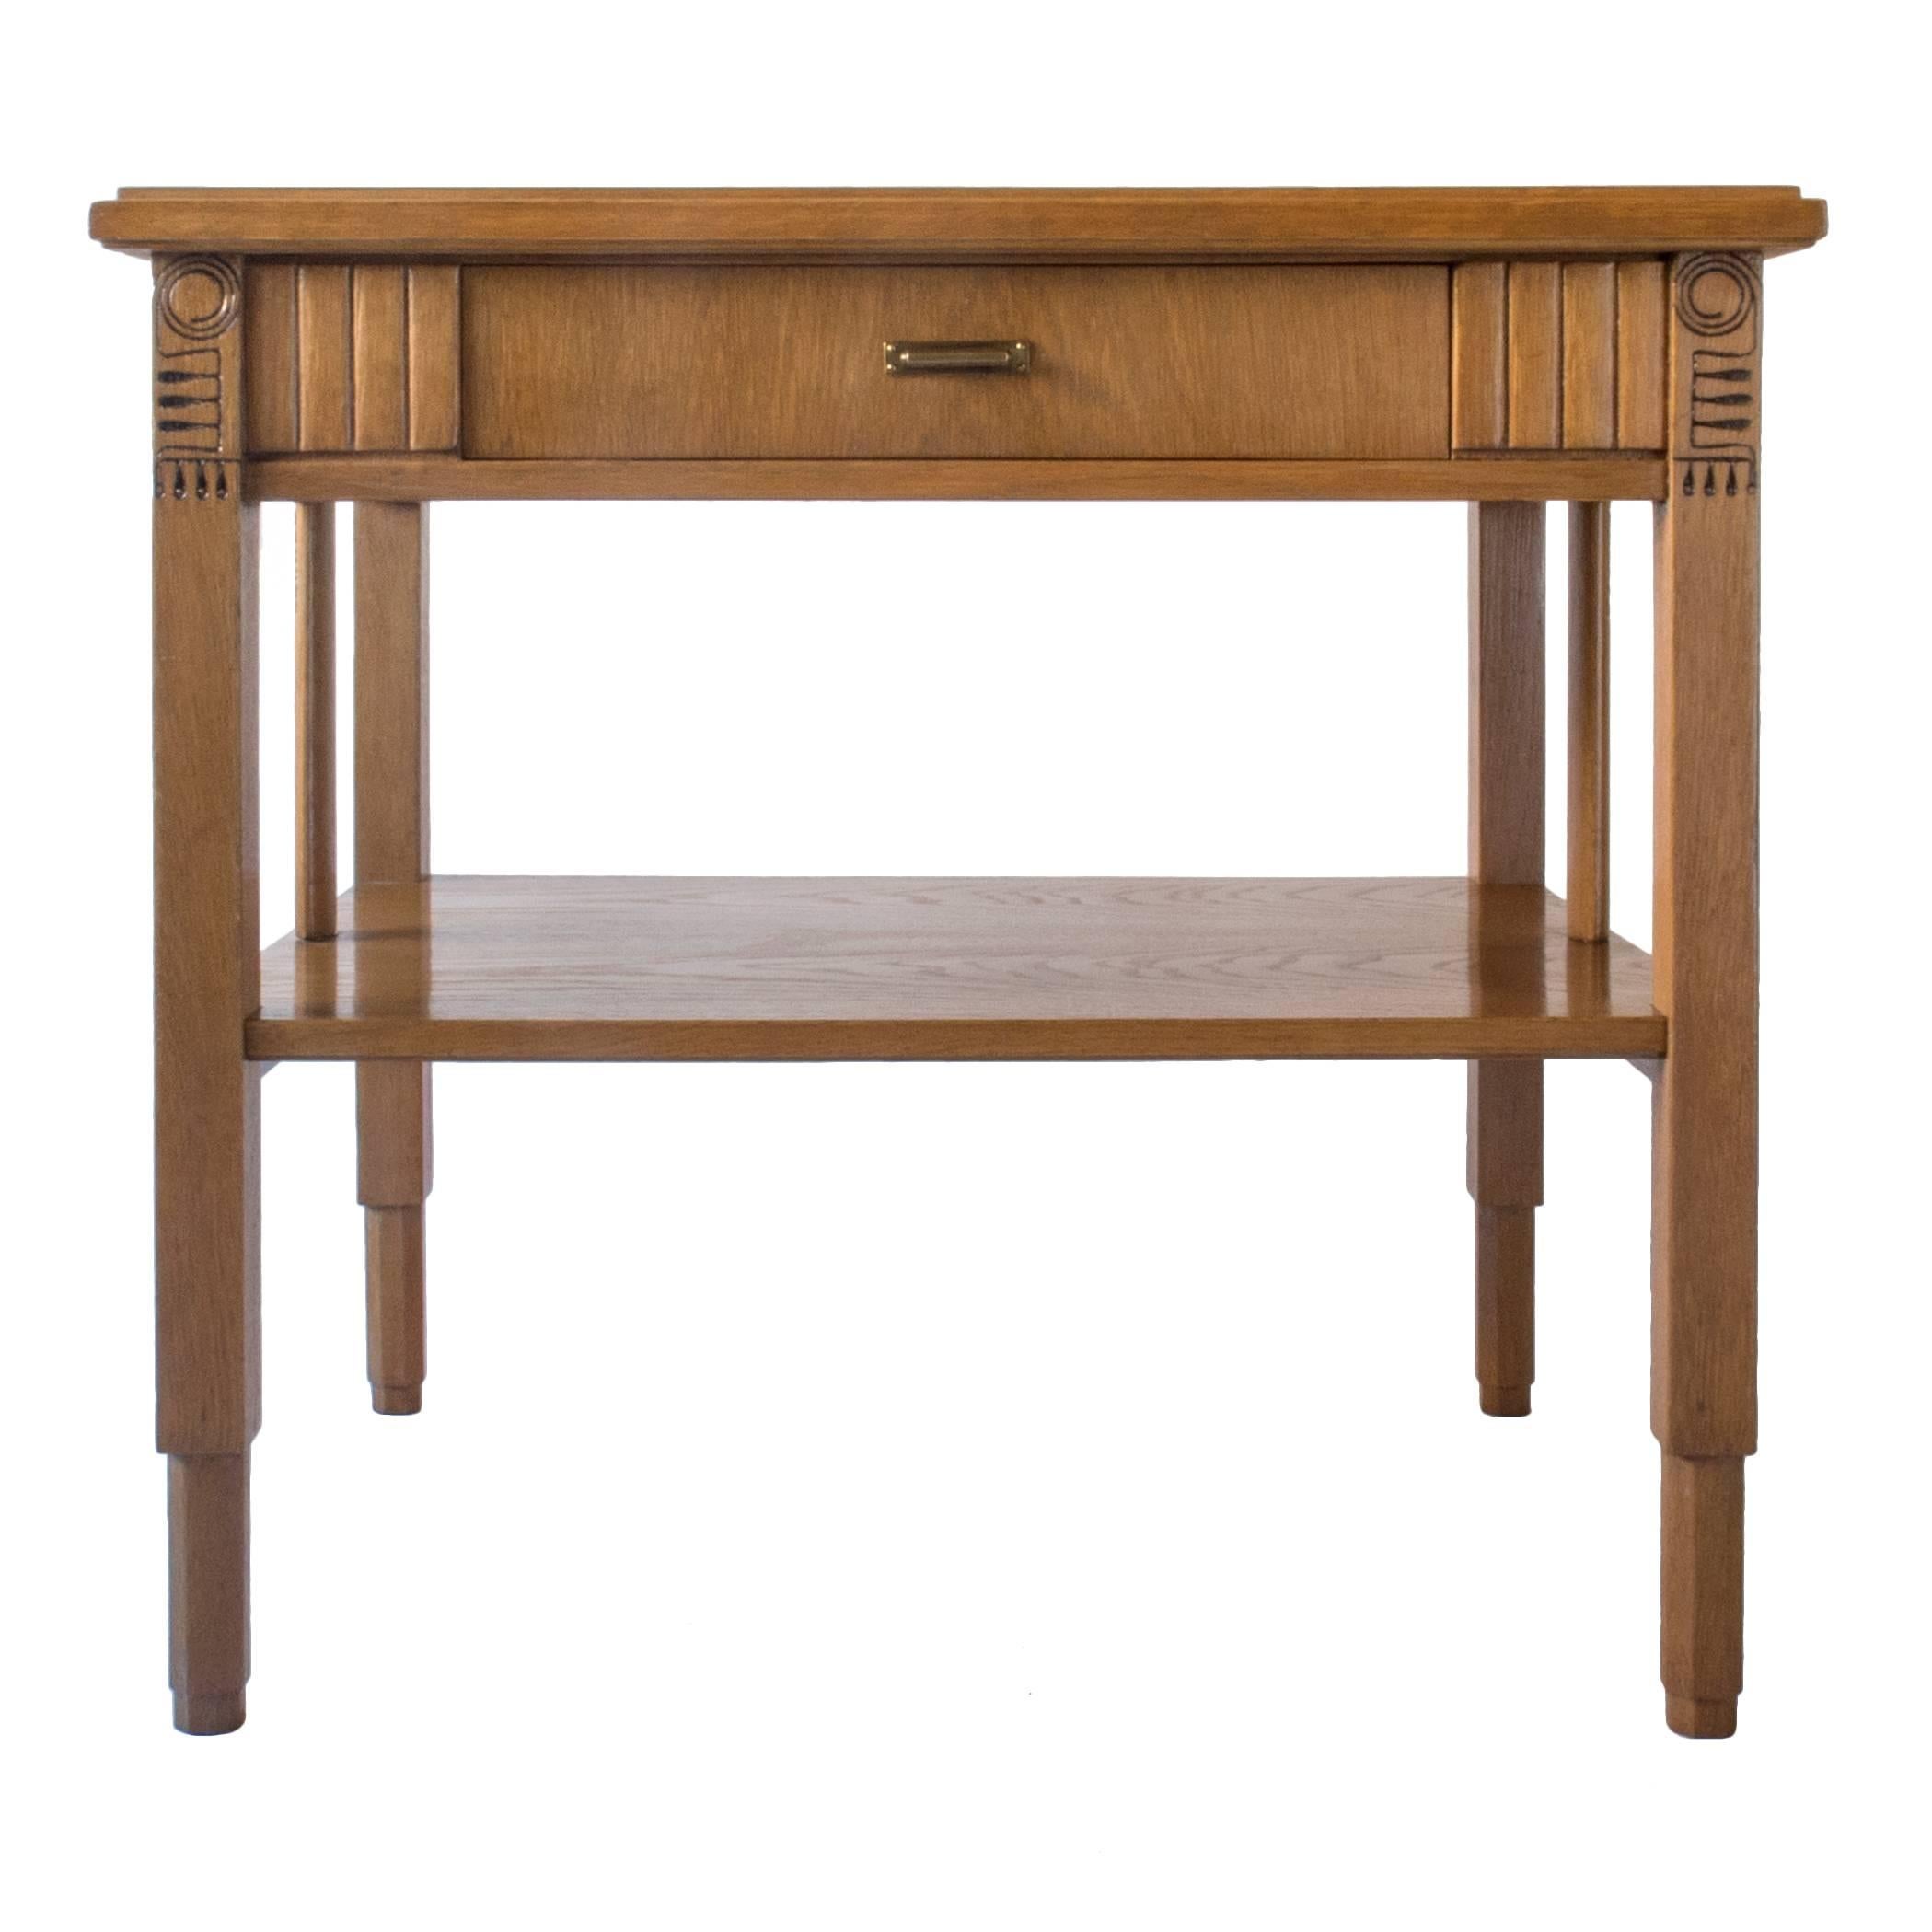 Manner of Eliel Saarinen, Finnish Carved Oak Two-Tier Jugend Sideboard or Table